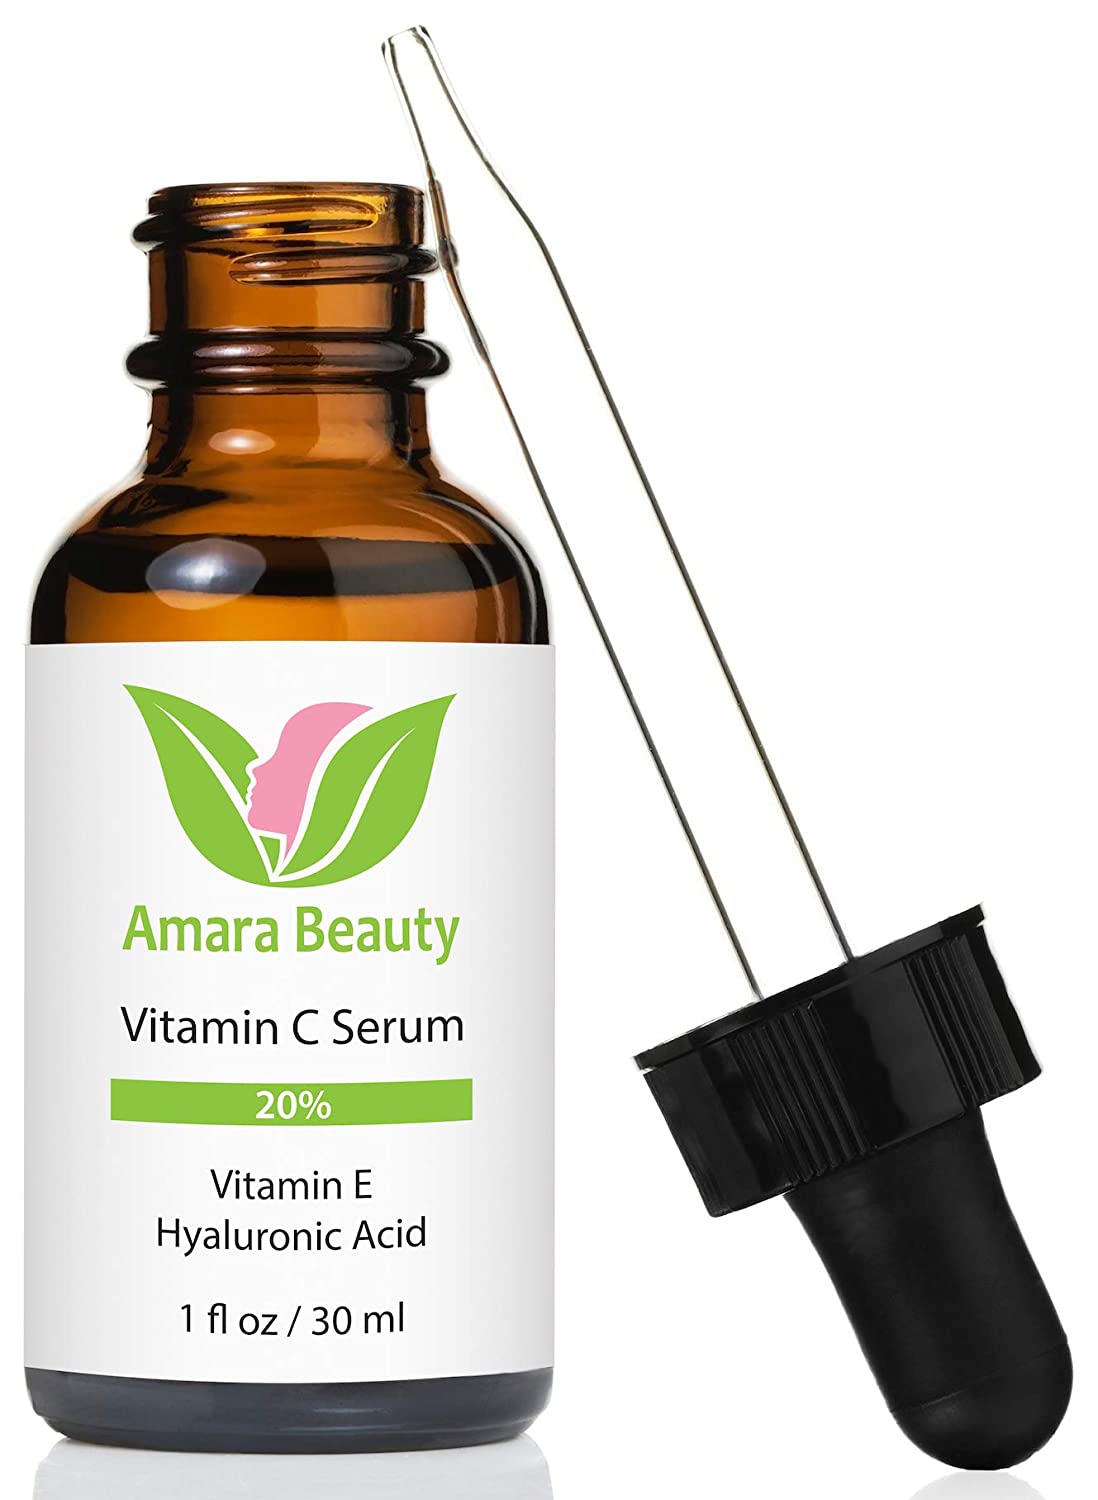 Amara Beauty Face Hyaluronic Acid & Vitamin C Serum